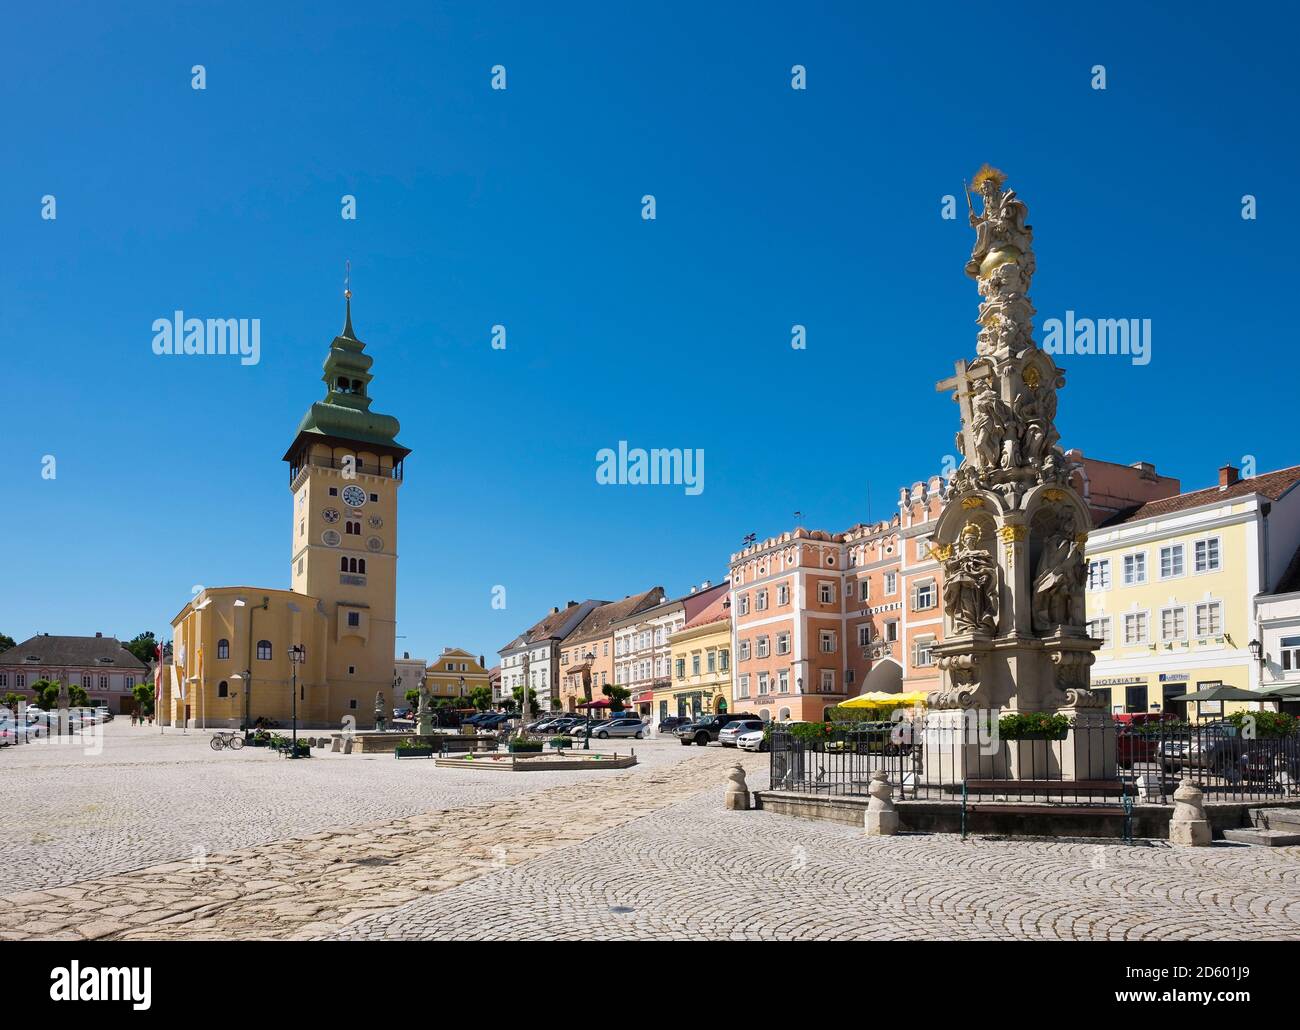 Austria, Lower Austria, Main Square, Townhall and Trinity Column Stock Photo